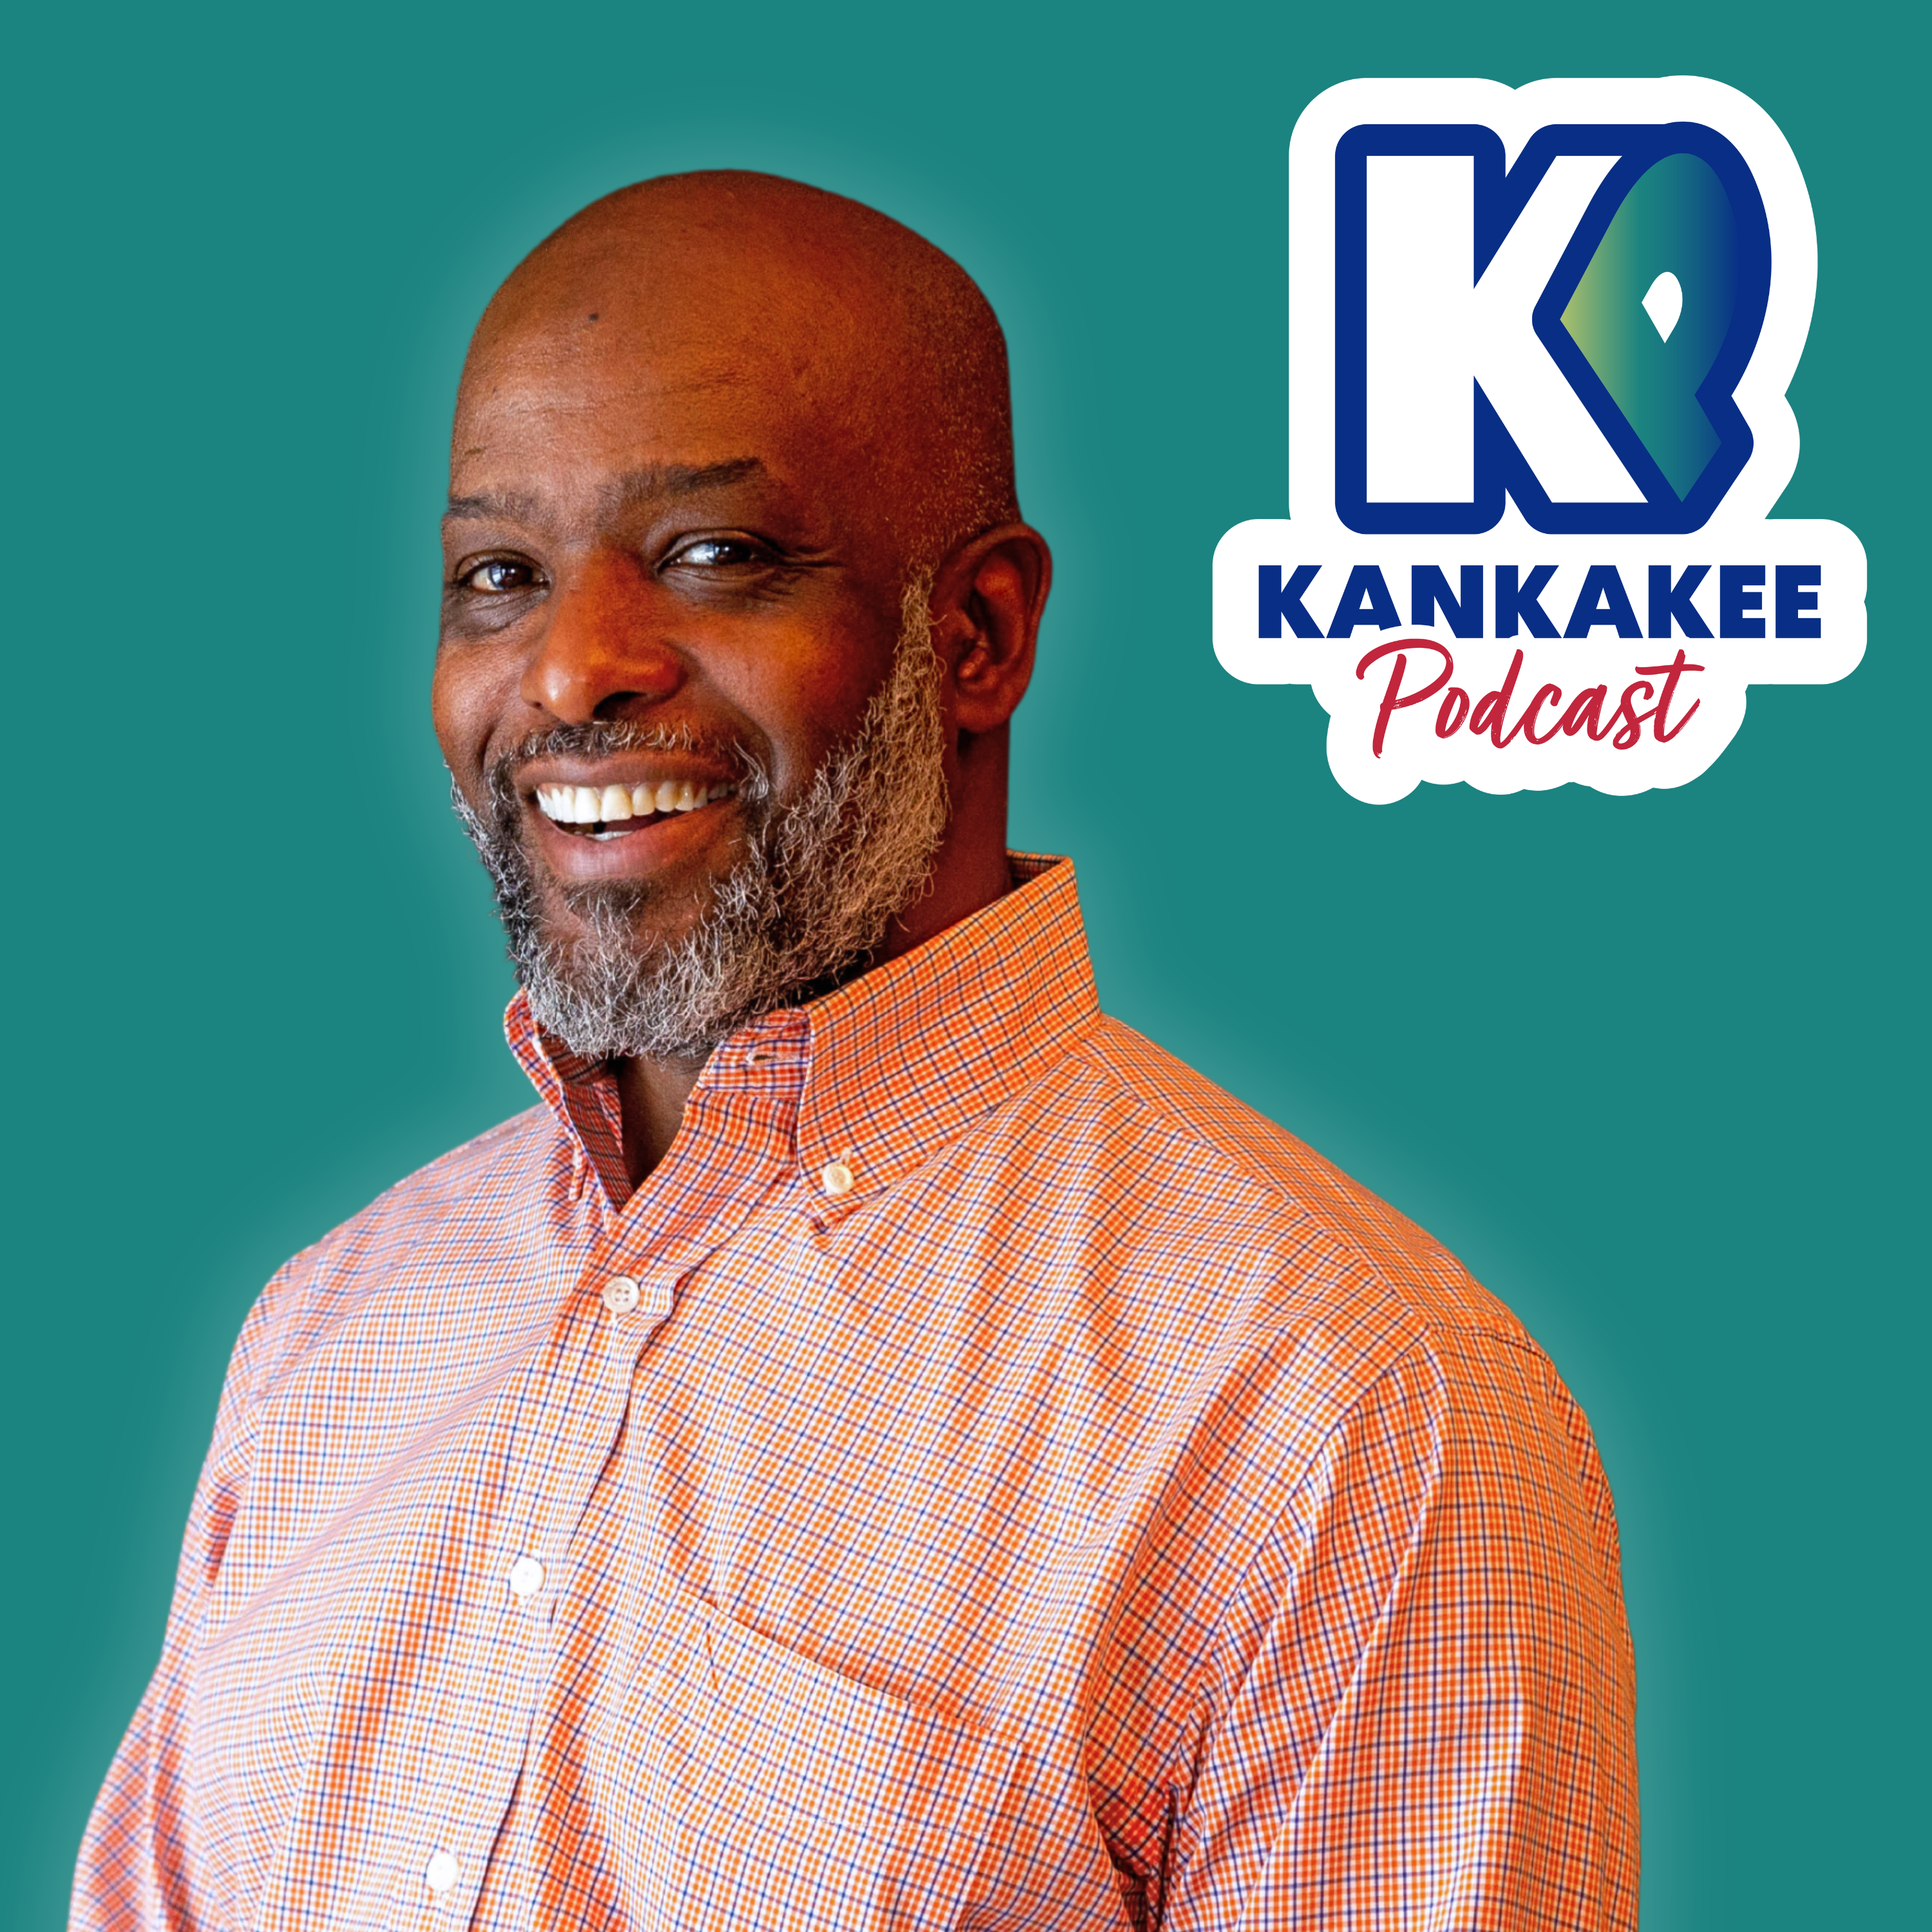 145: Aaron Clark on Healing a City: The Kankakee Forgives Initiative